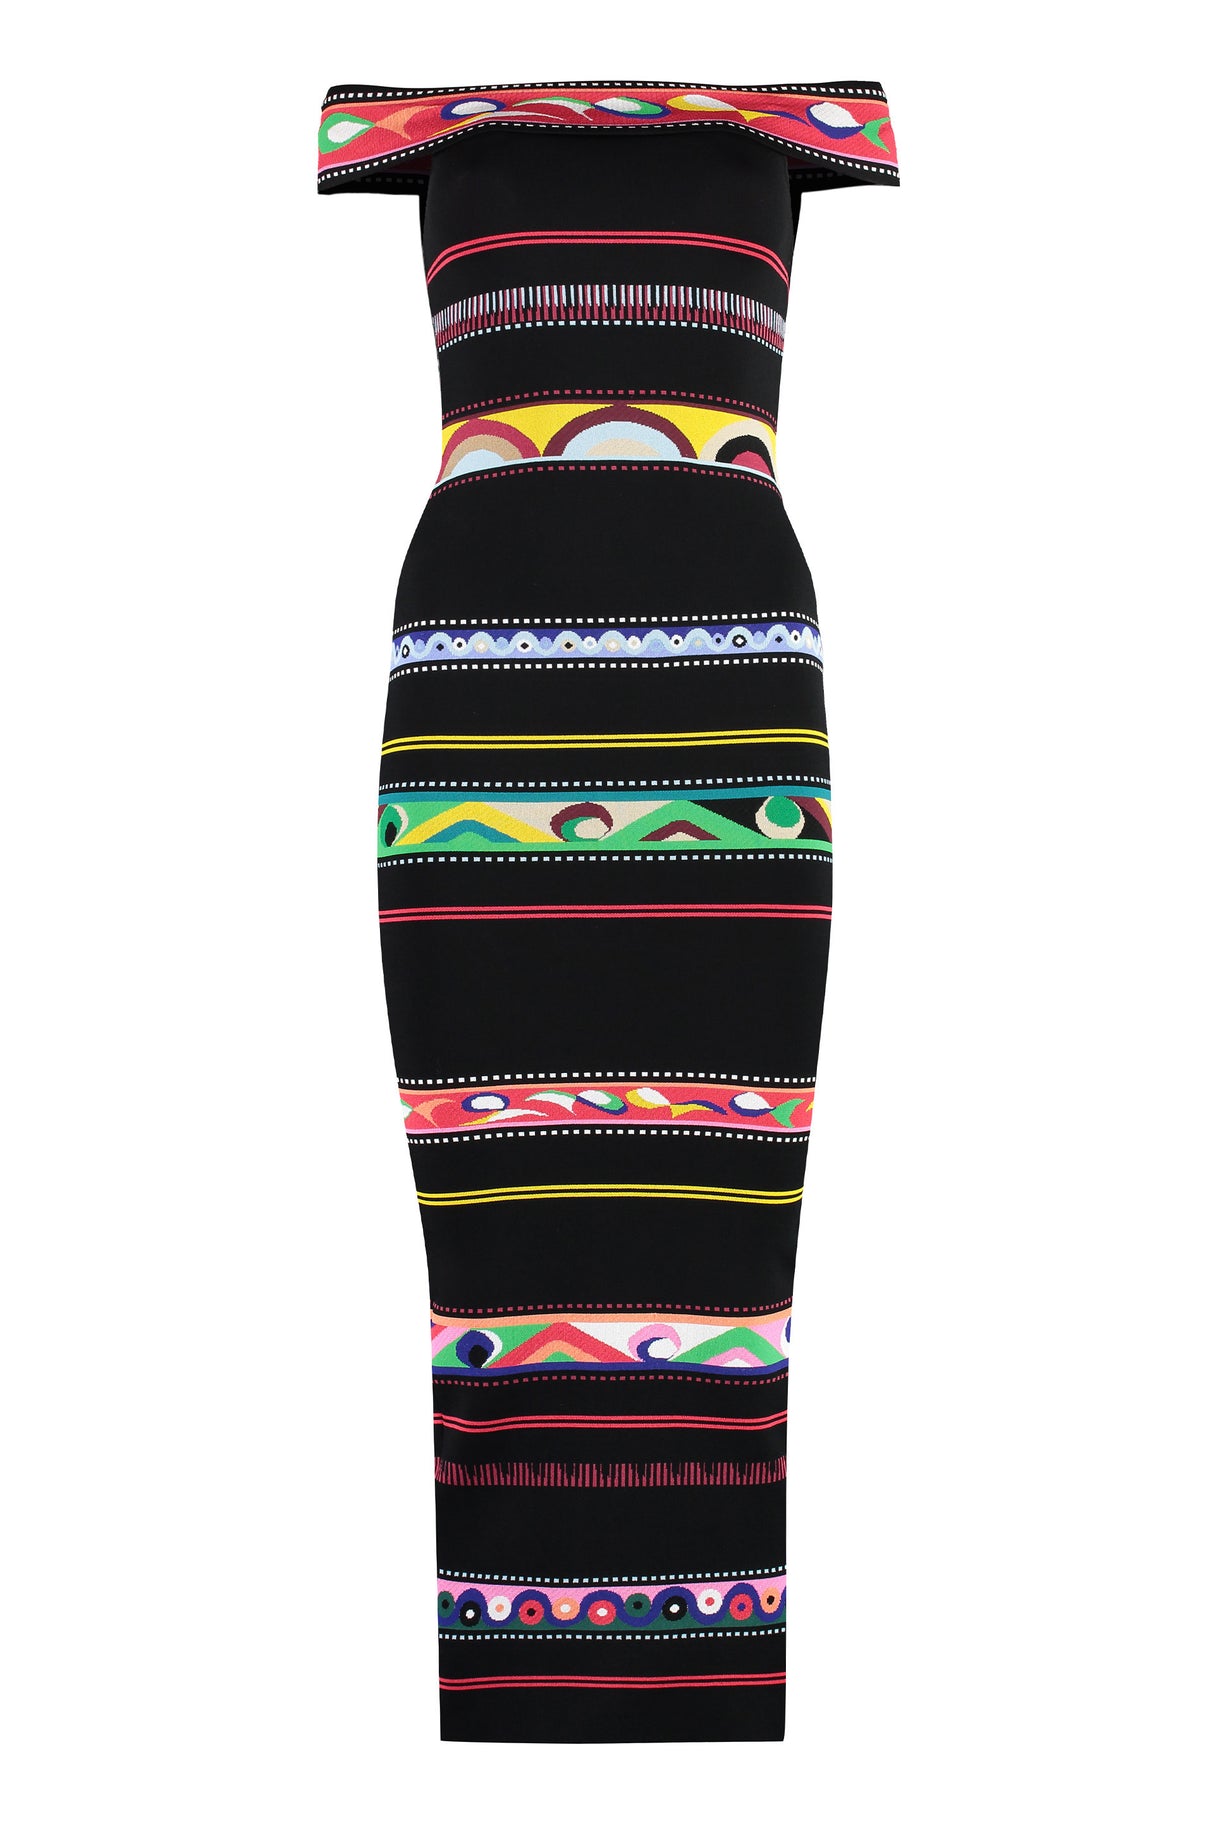 EMILIO PUCCI Black Jacquard Knit Dress for Women with Off-The-Shoulder Neckline and Back Slit Hem - FW23 Collection